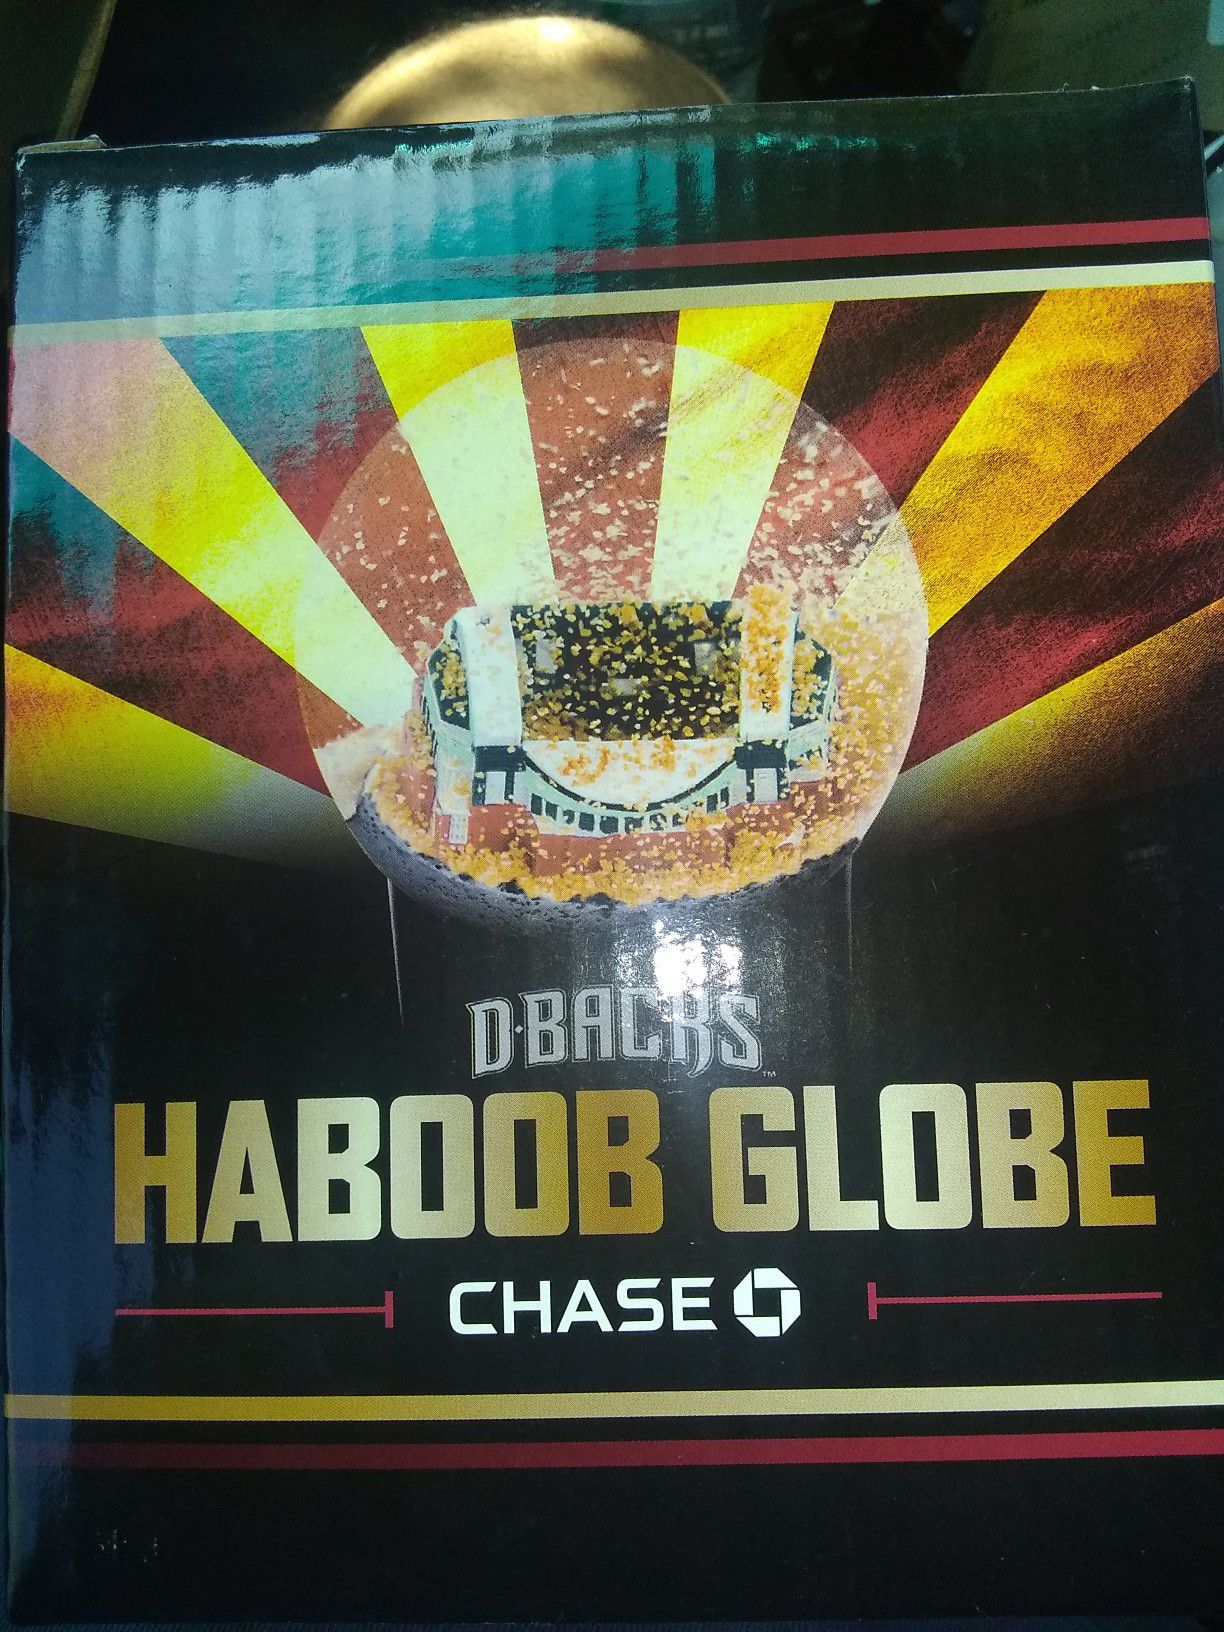 Haboob globe